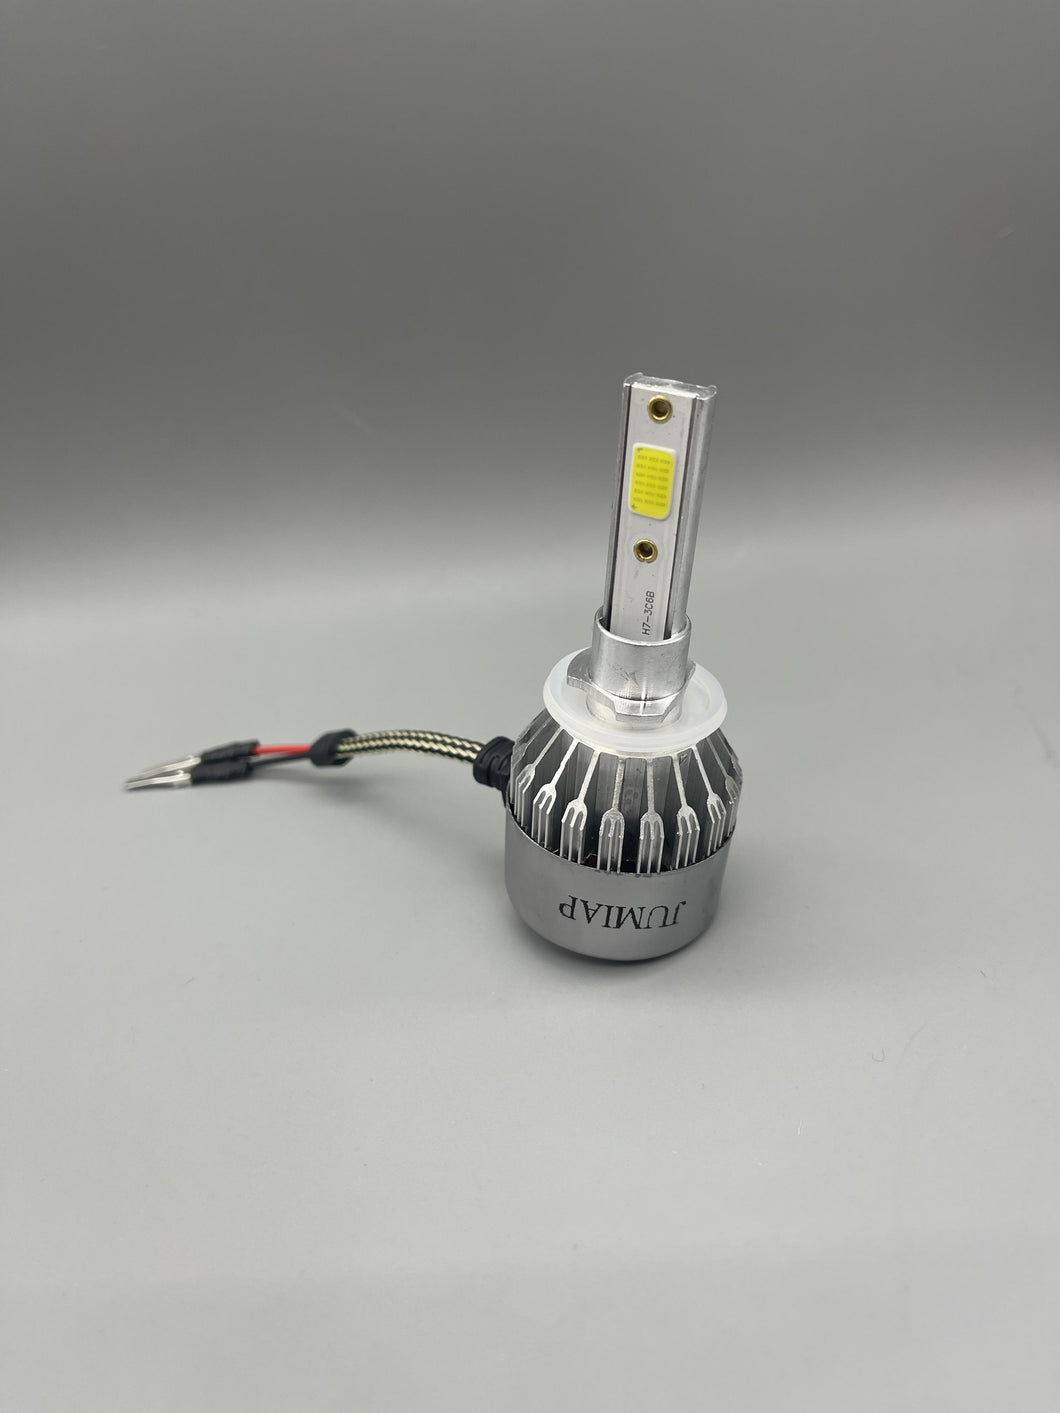 JUMIAP Headlights for automobiles ,9005/HB3 LED Headlight Bulbs, 120W 20000 Lumens Bright LED Headlights, 6500K Cool White LED Headlight Conversion Kit IP68 Waterproof, Quick Installation, Pack of 2